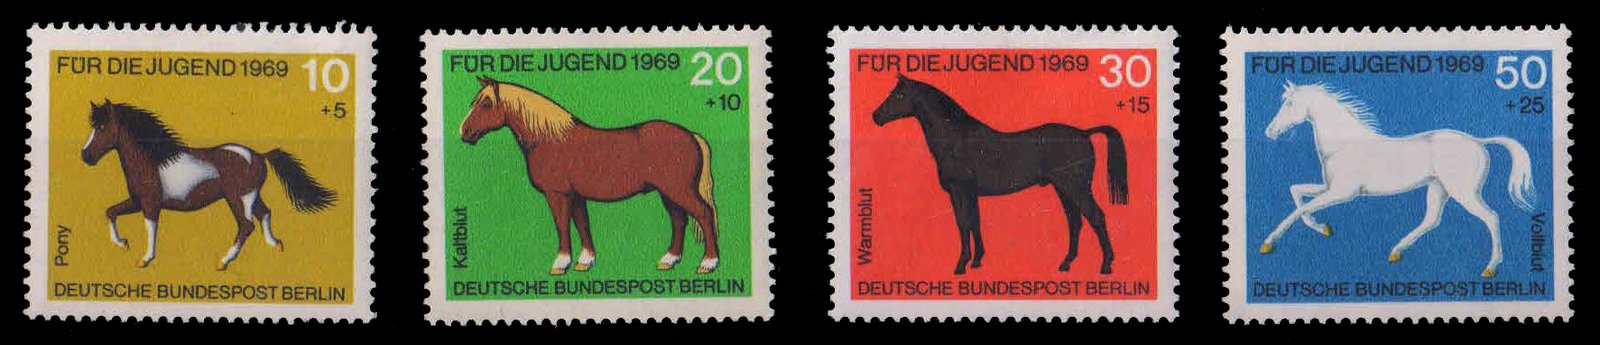 BERLIN GERMANY 1969-Horses, Child Welfare, Set of 4, MNH, S.G. B 328- B 331-Set of 4, MNH, Cat £ 4-